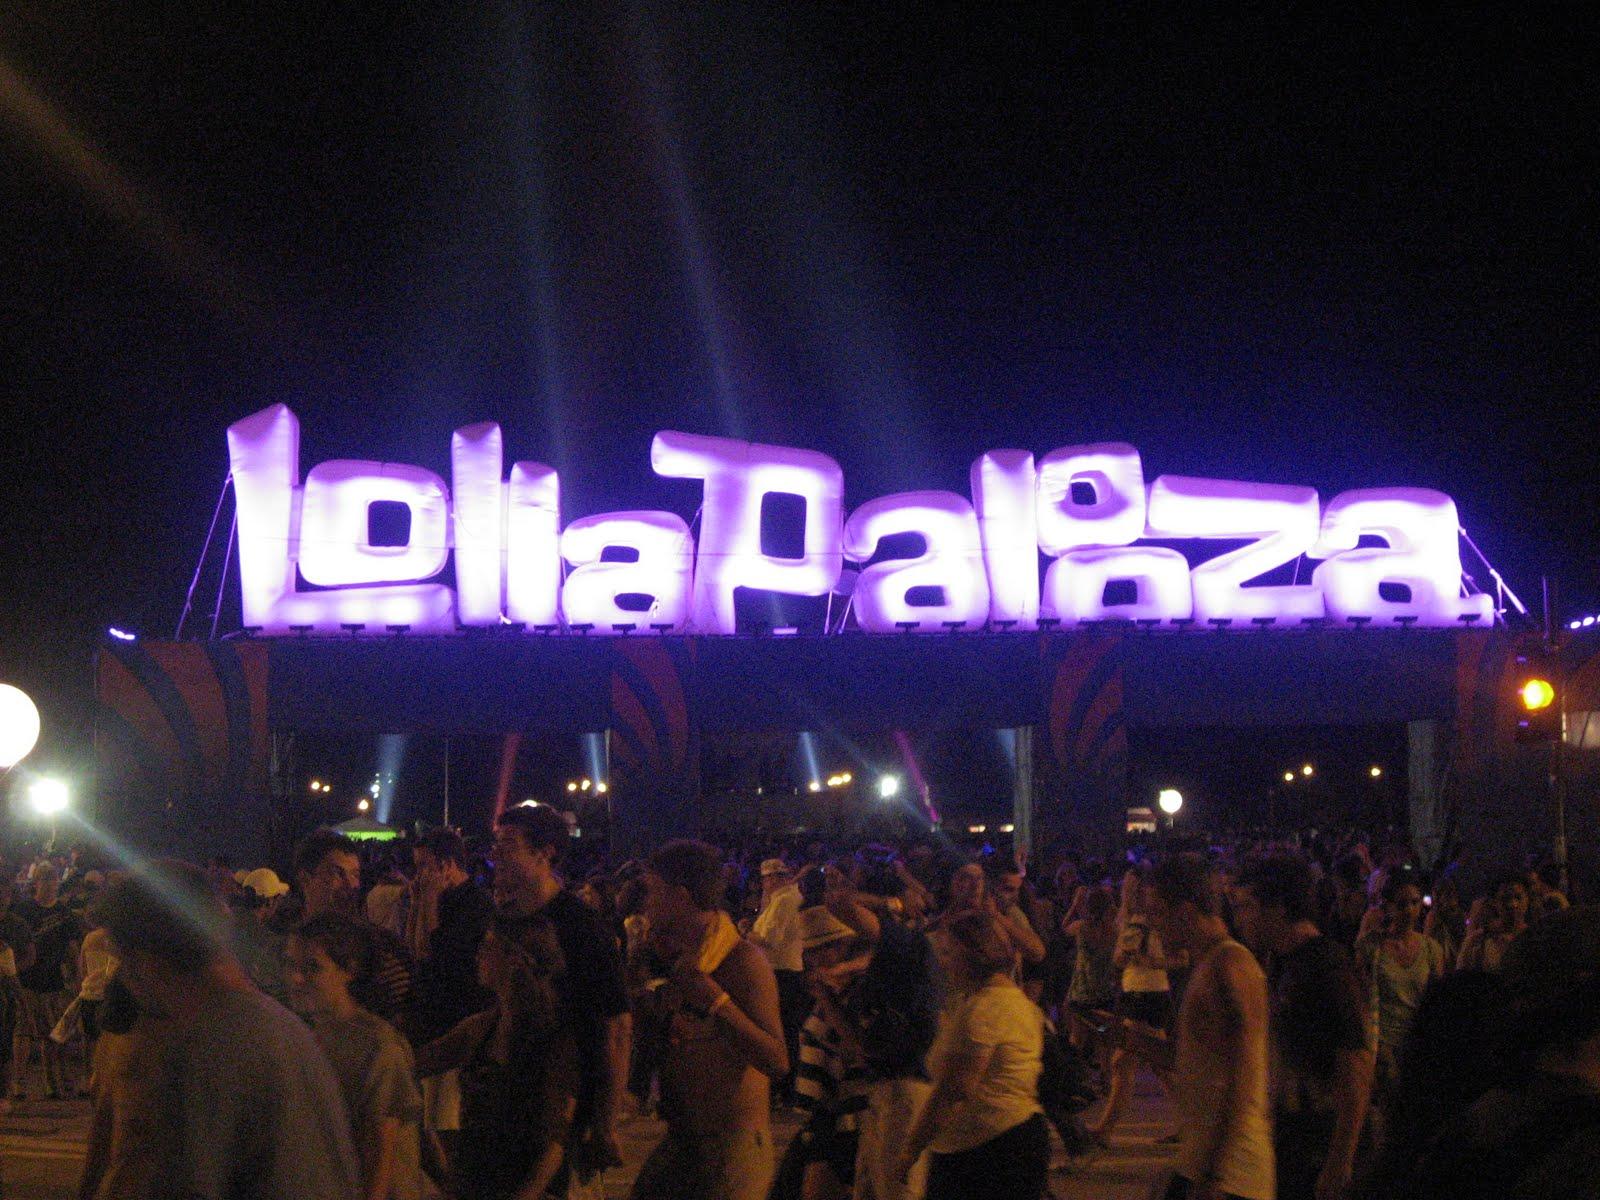 Lollapalooza. Music Festival Free HD Wallpaper, Image